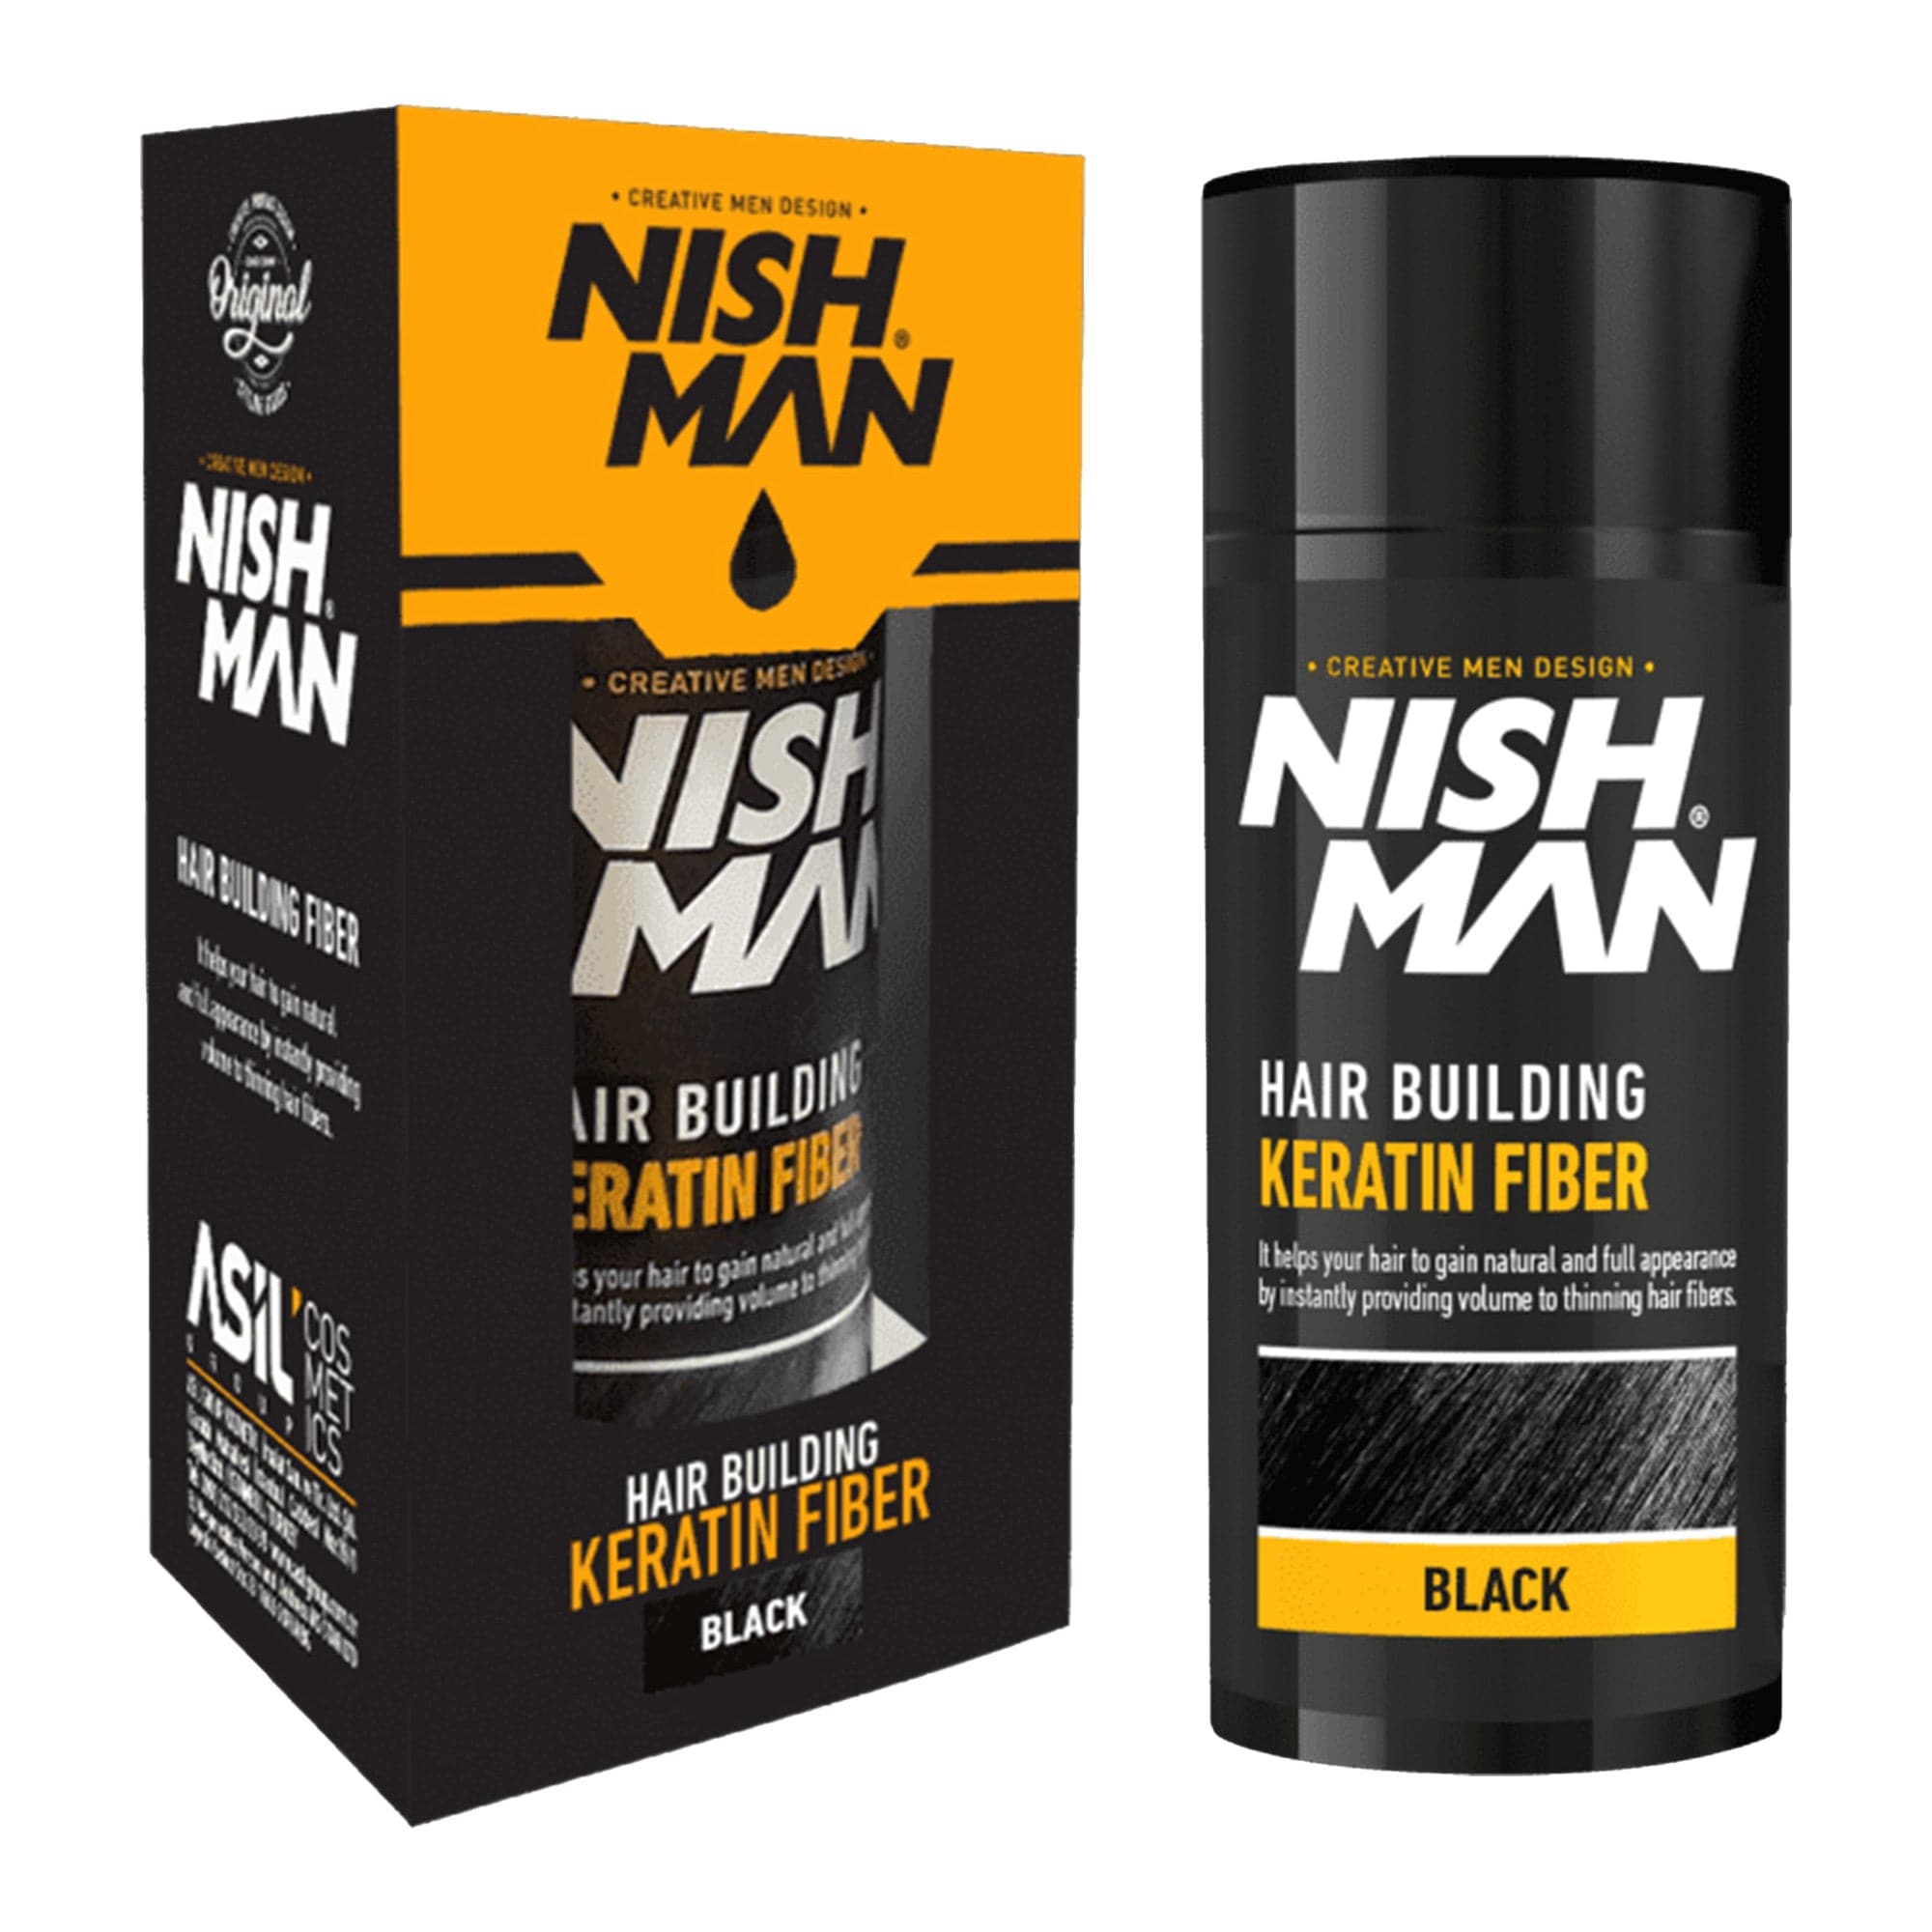 Nishman - Hair Building Keratin Fiber Black 21g